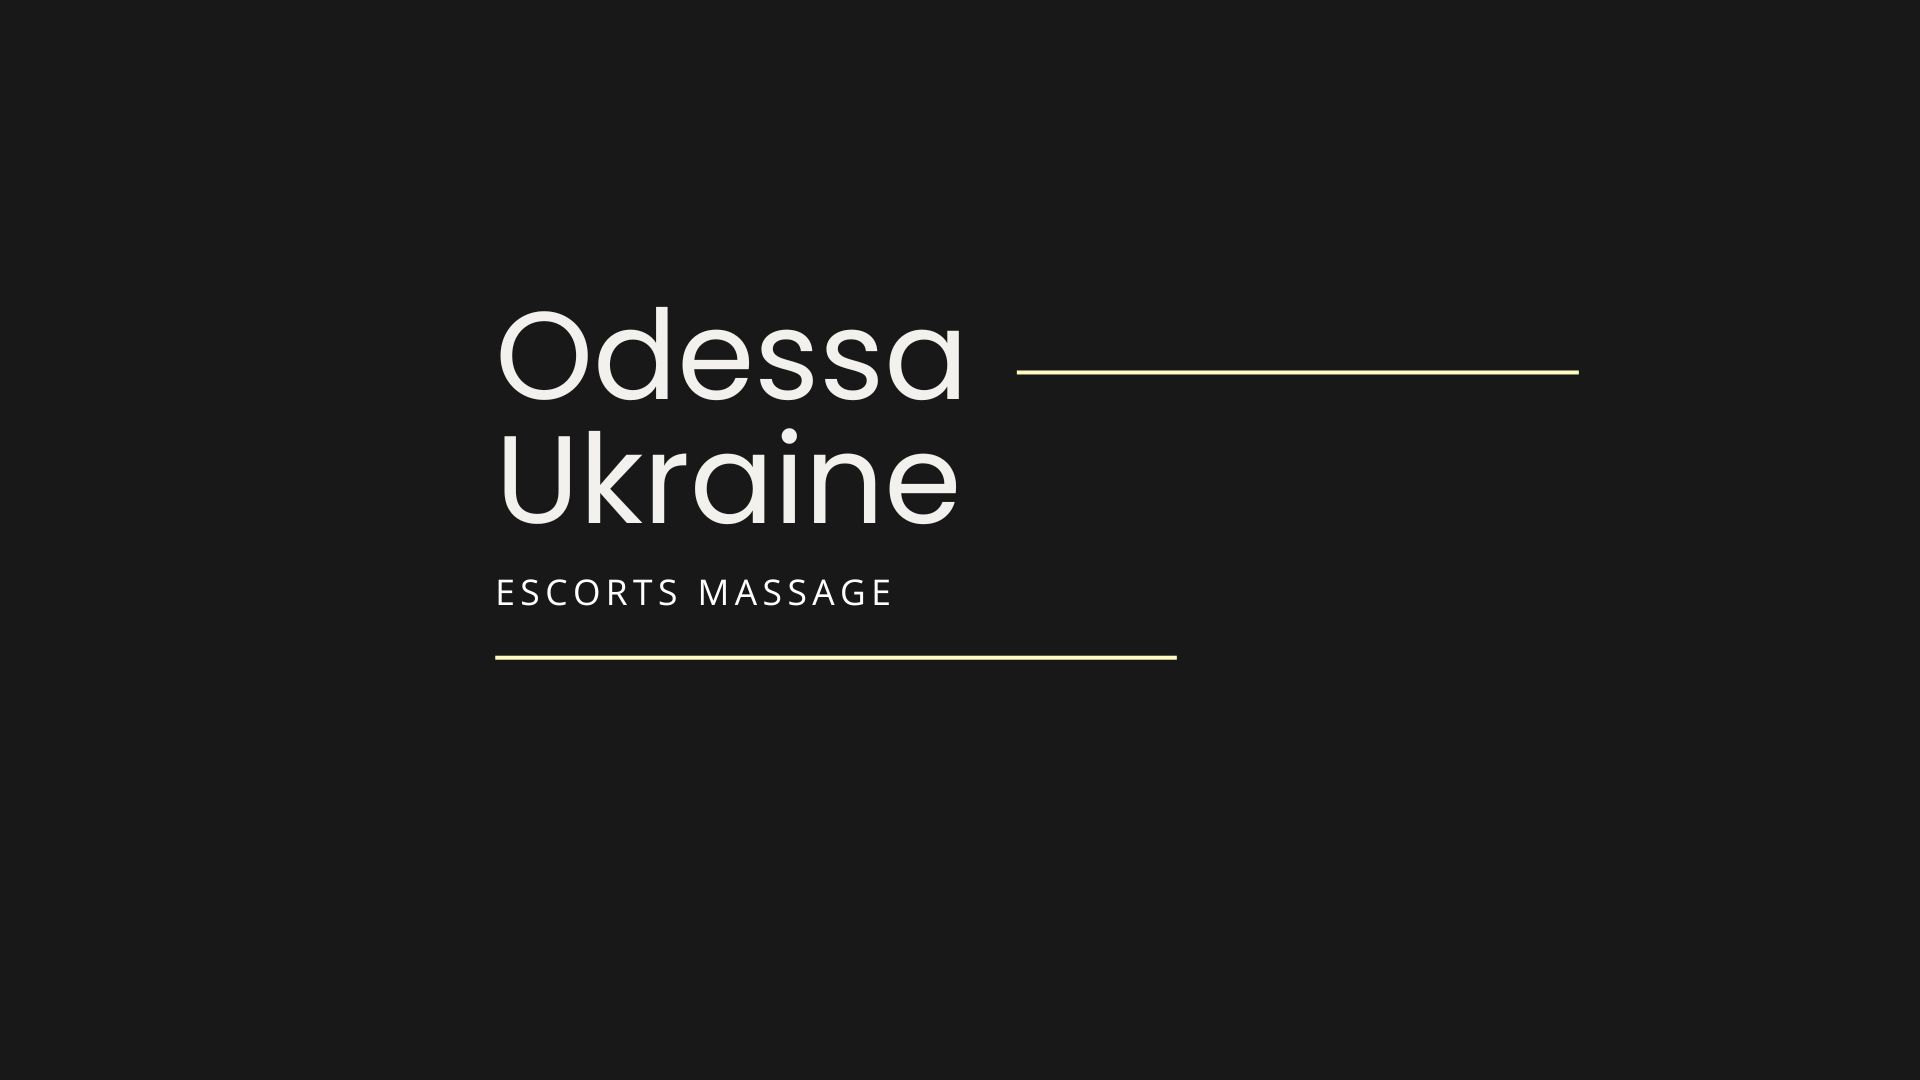 Odessa escort massage - Incredible masseuses Outcall